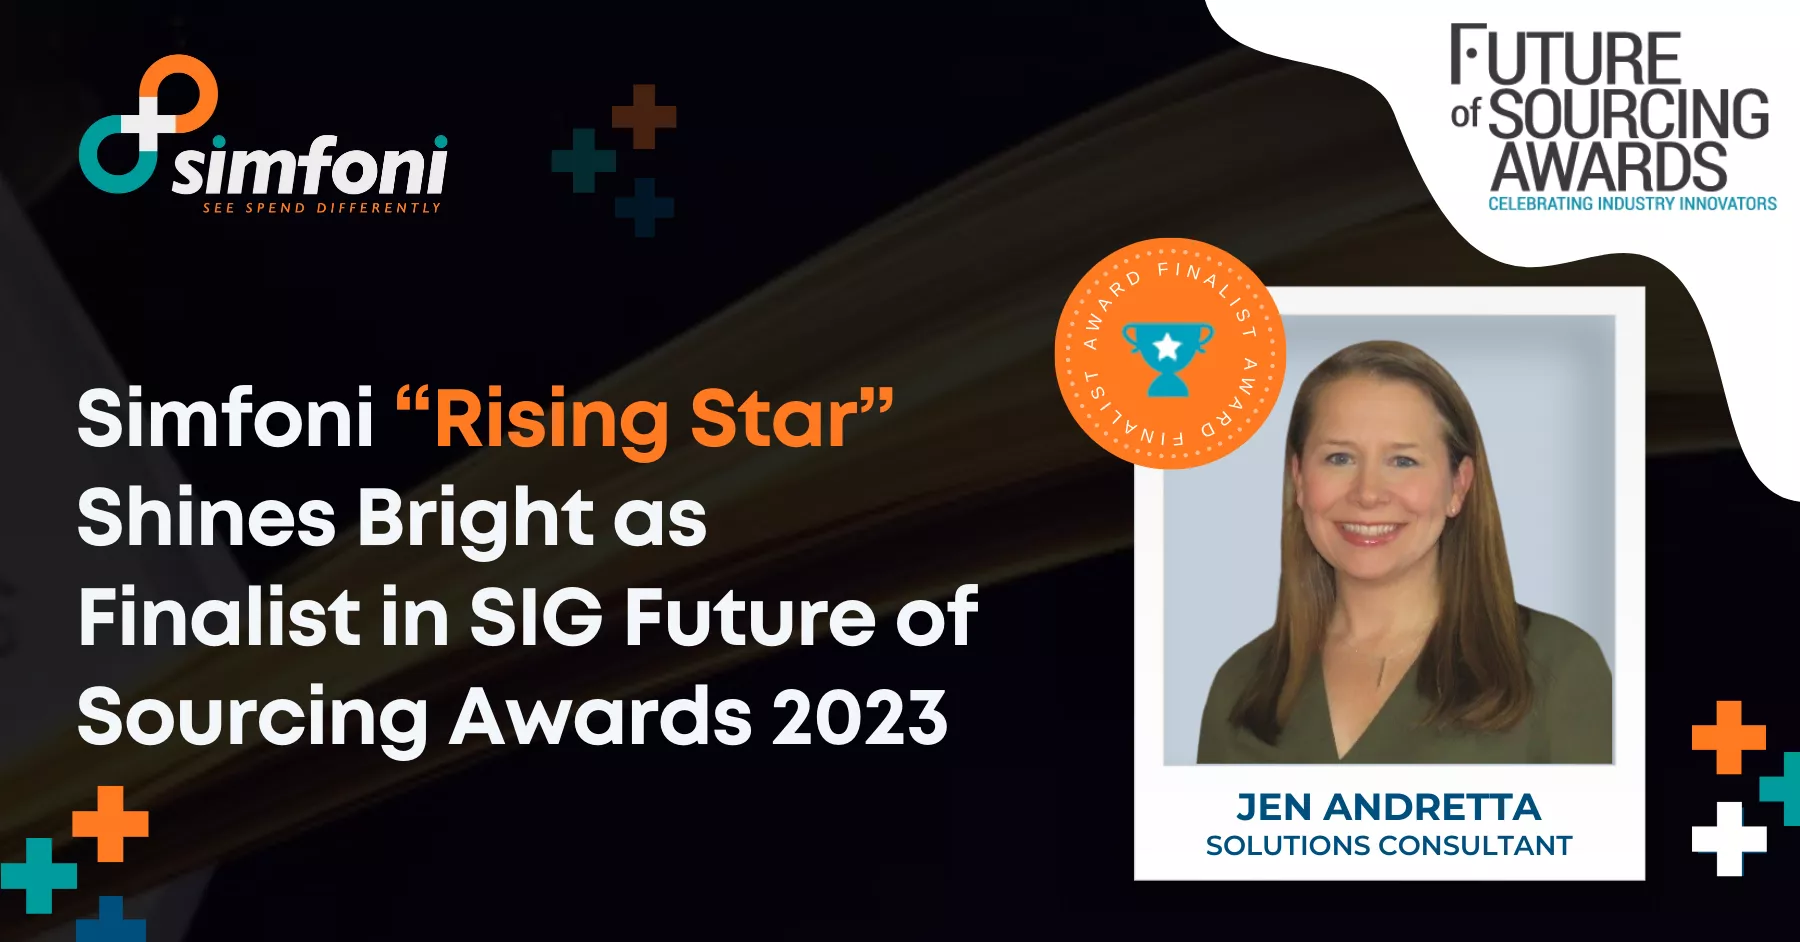 Simfoni SIG Future of Sourcing Awards 2023